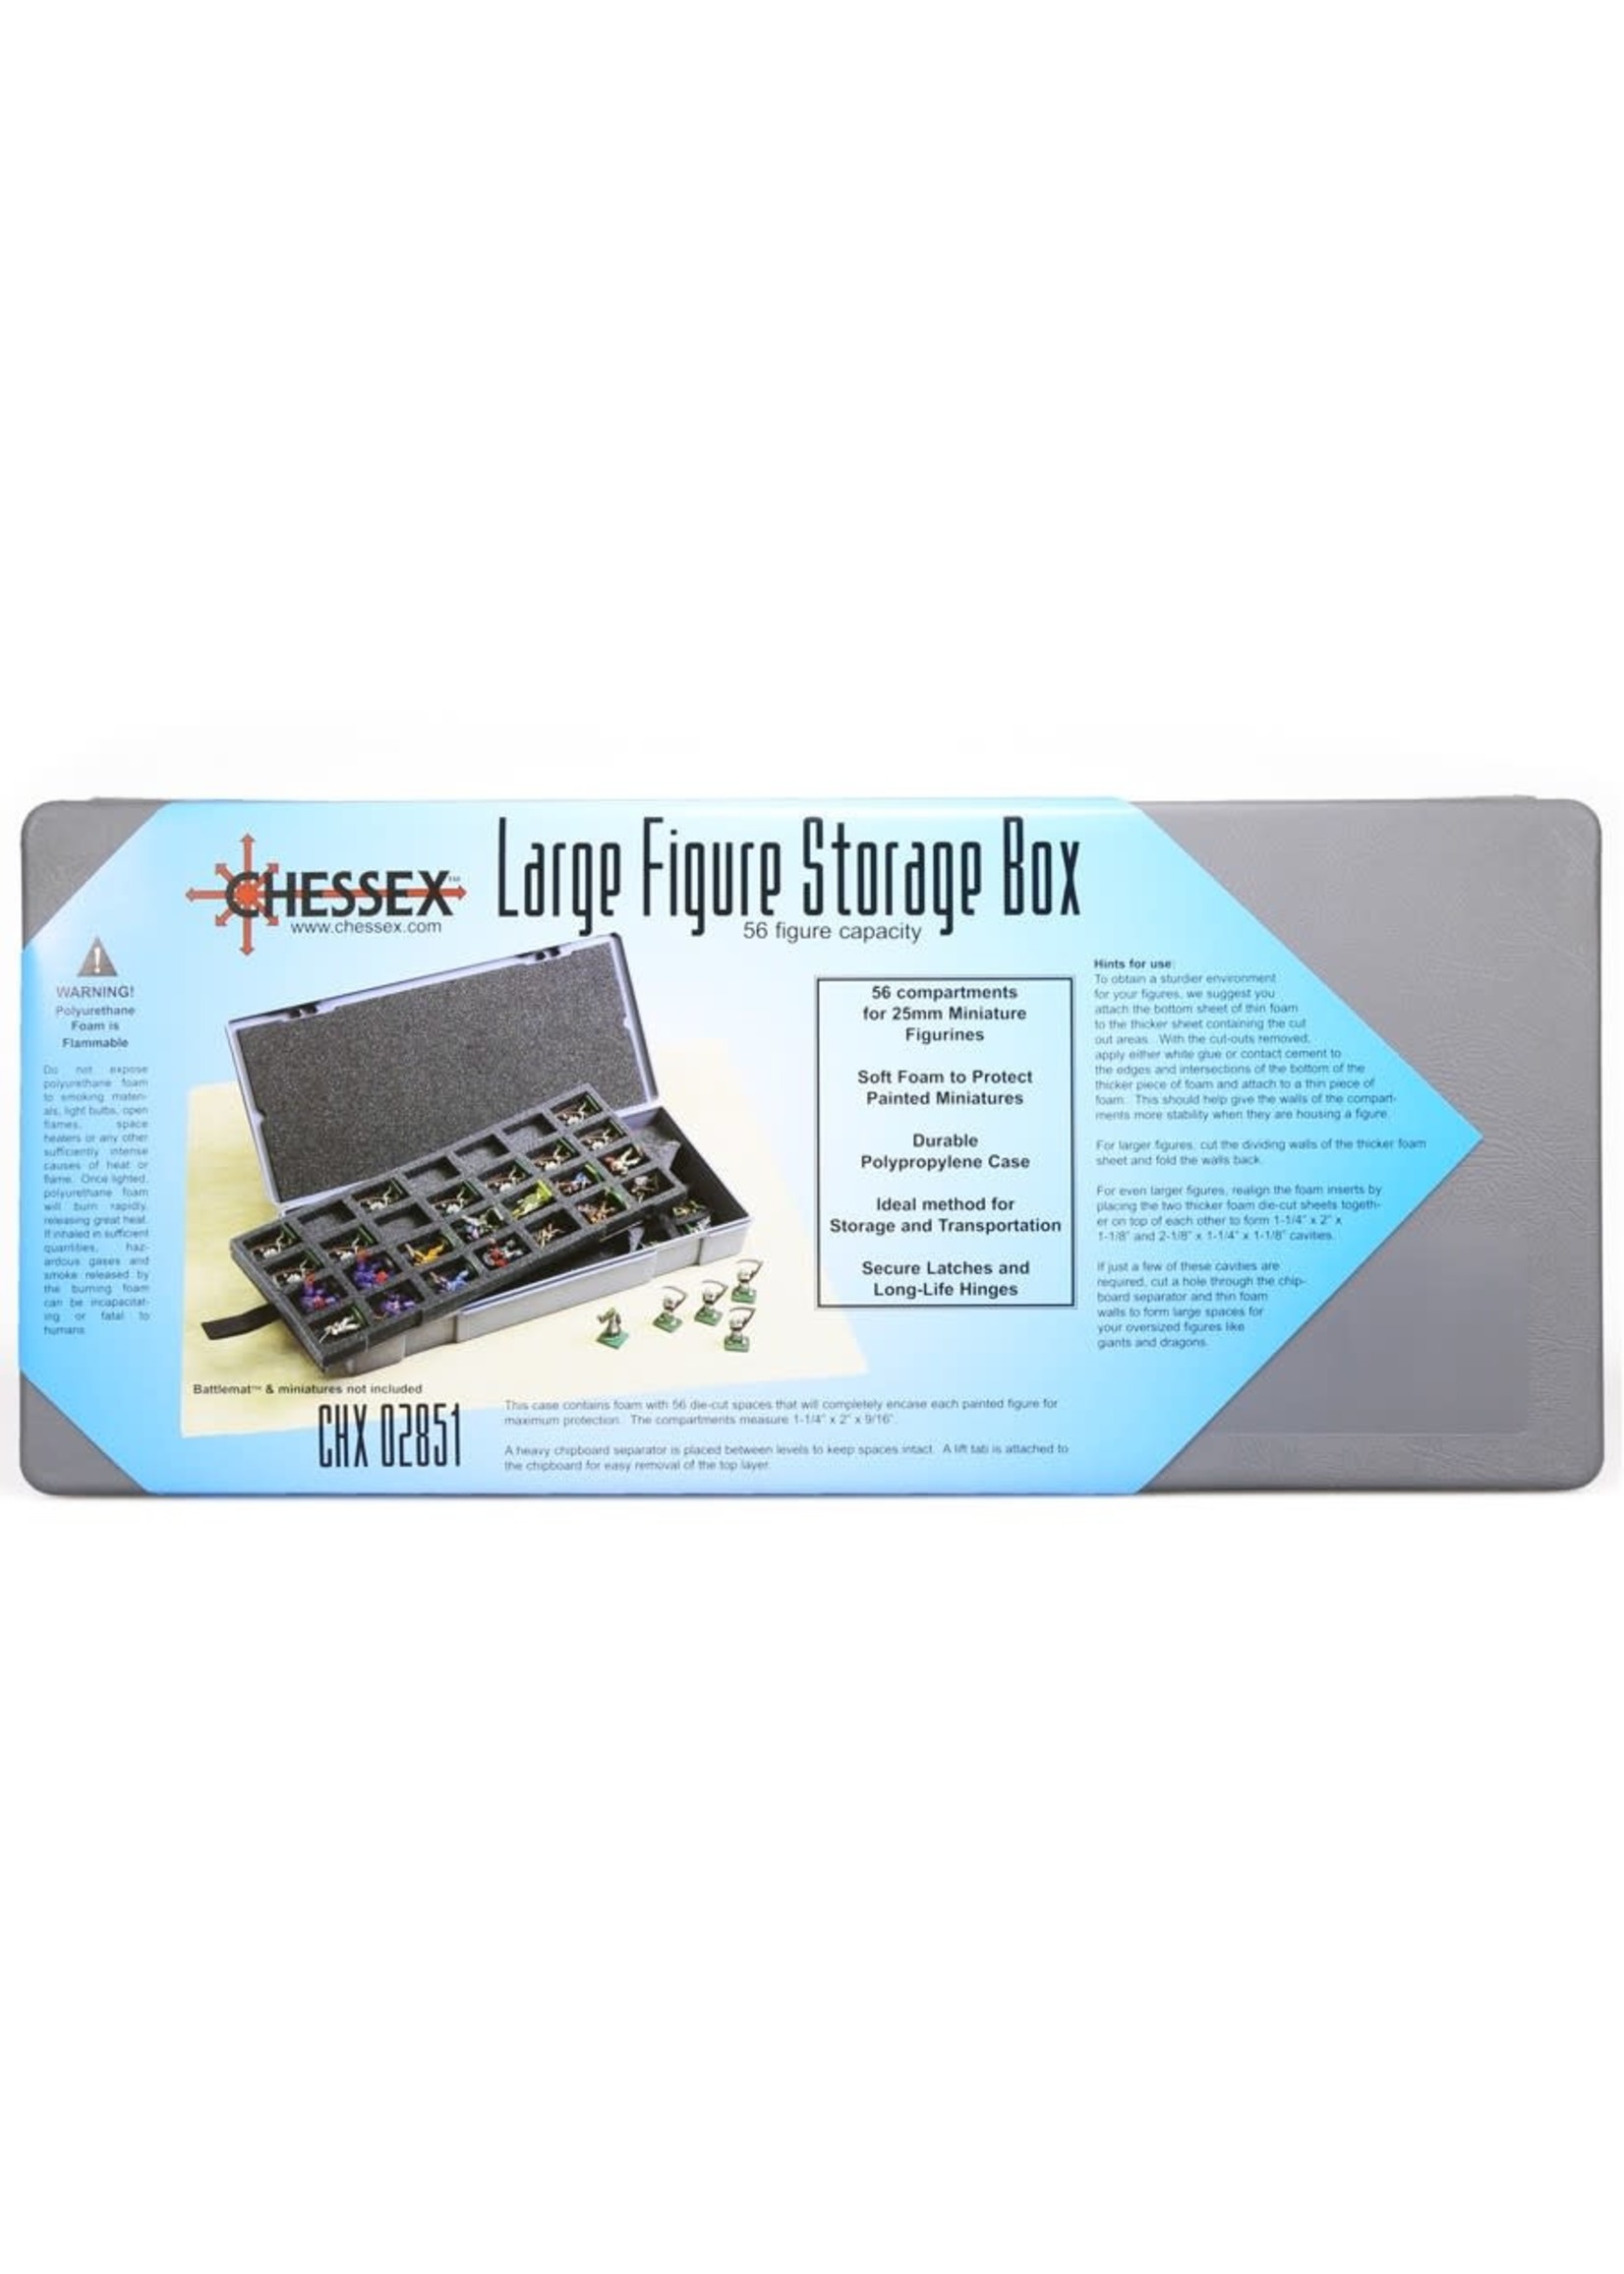 Chessex FigureStorage Box LG 56ct